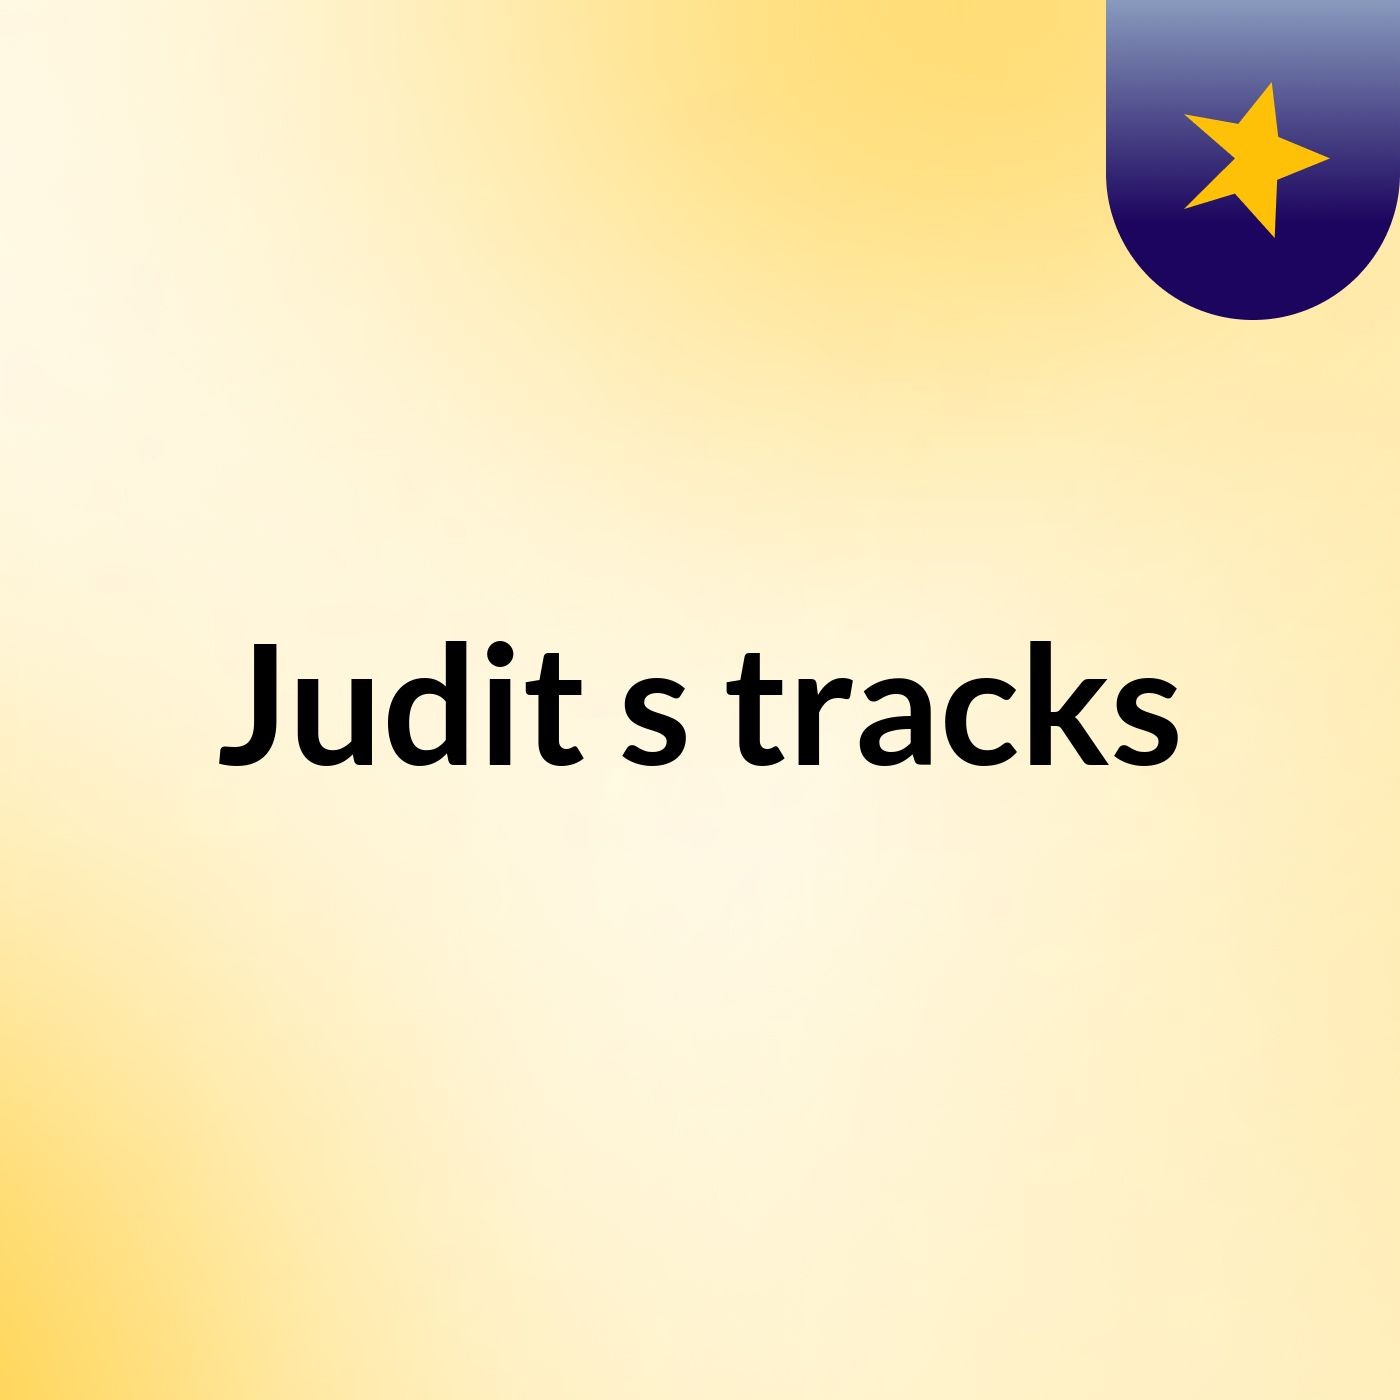 Judit's tracks